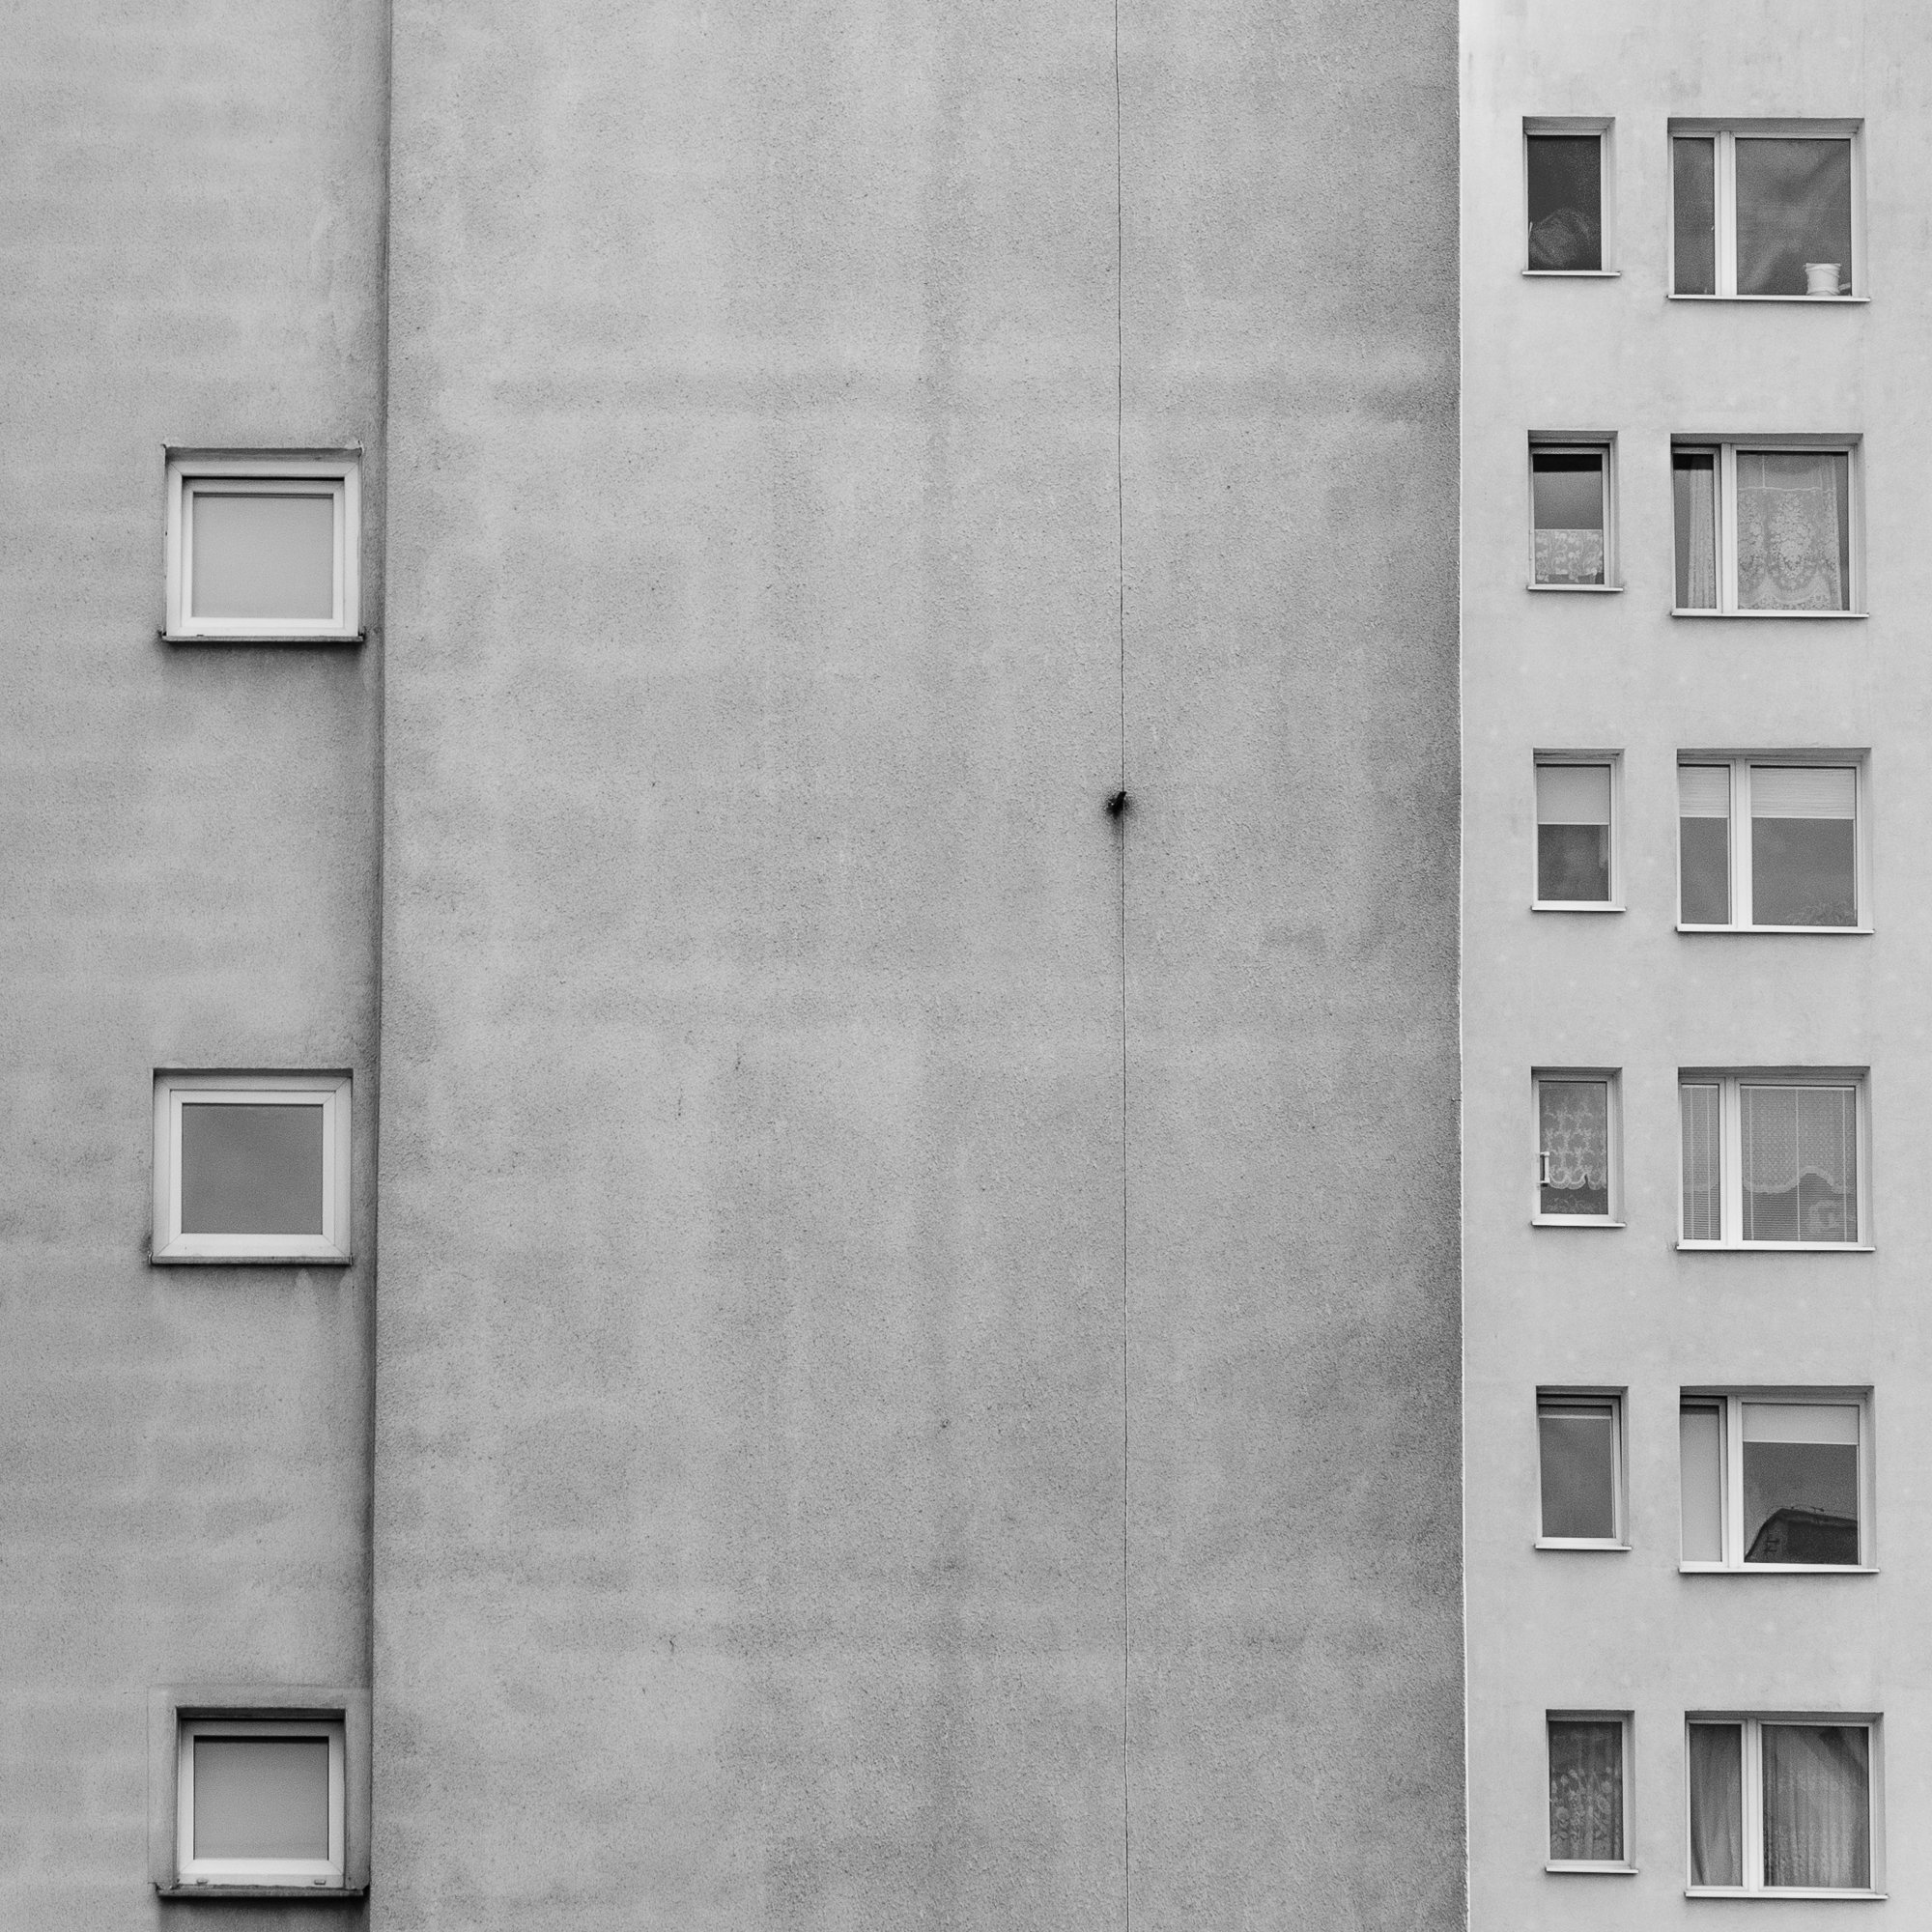 Adam Mazek Photography. Warsaw (Warszawa) 2017. Square. Perspective. Minimalism. Blocks of flats. M.C. Escher.